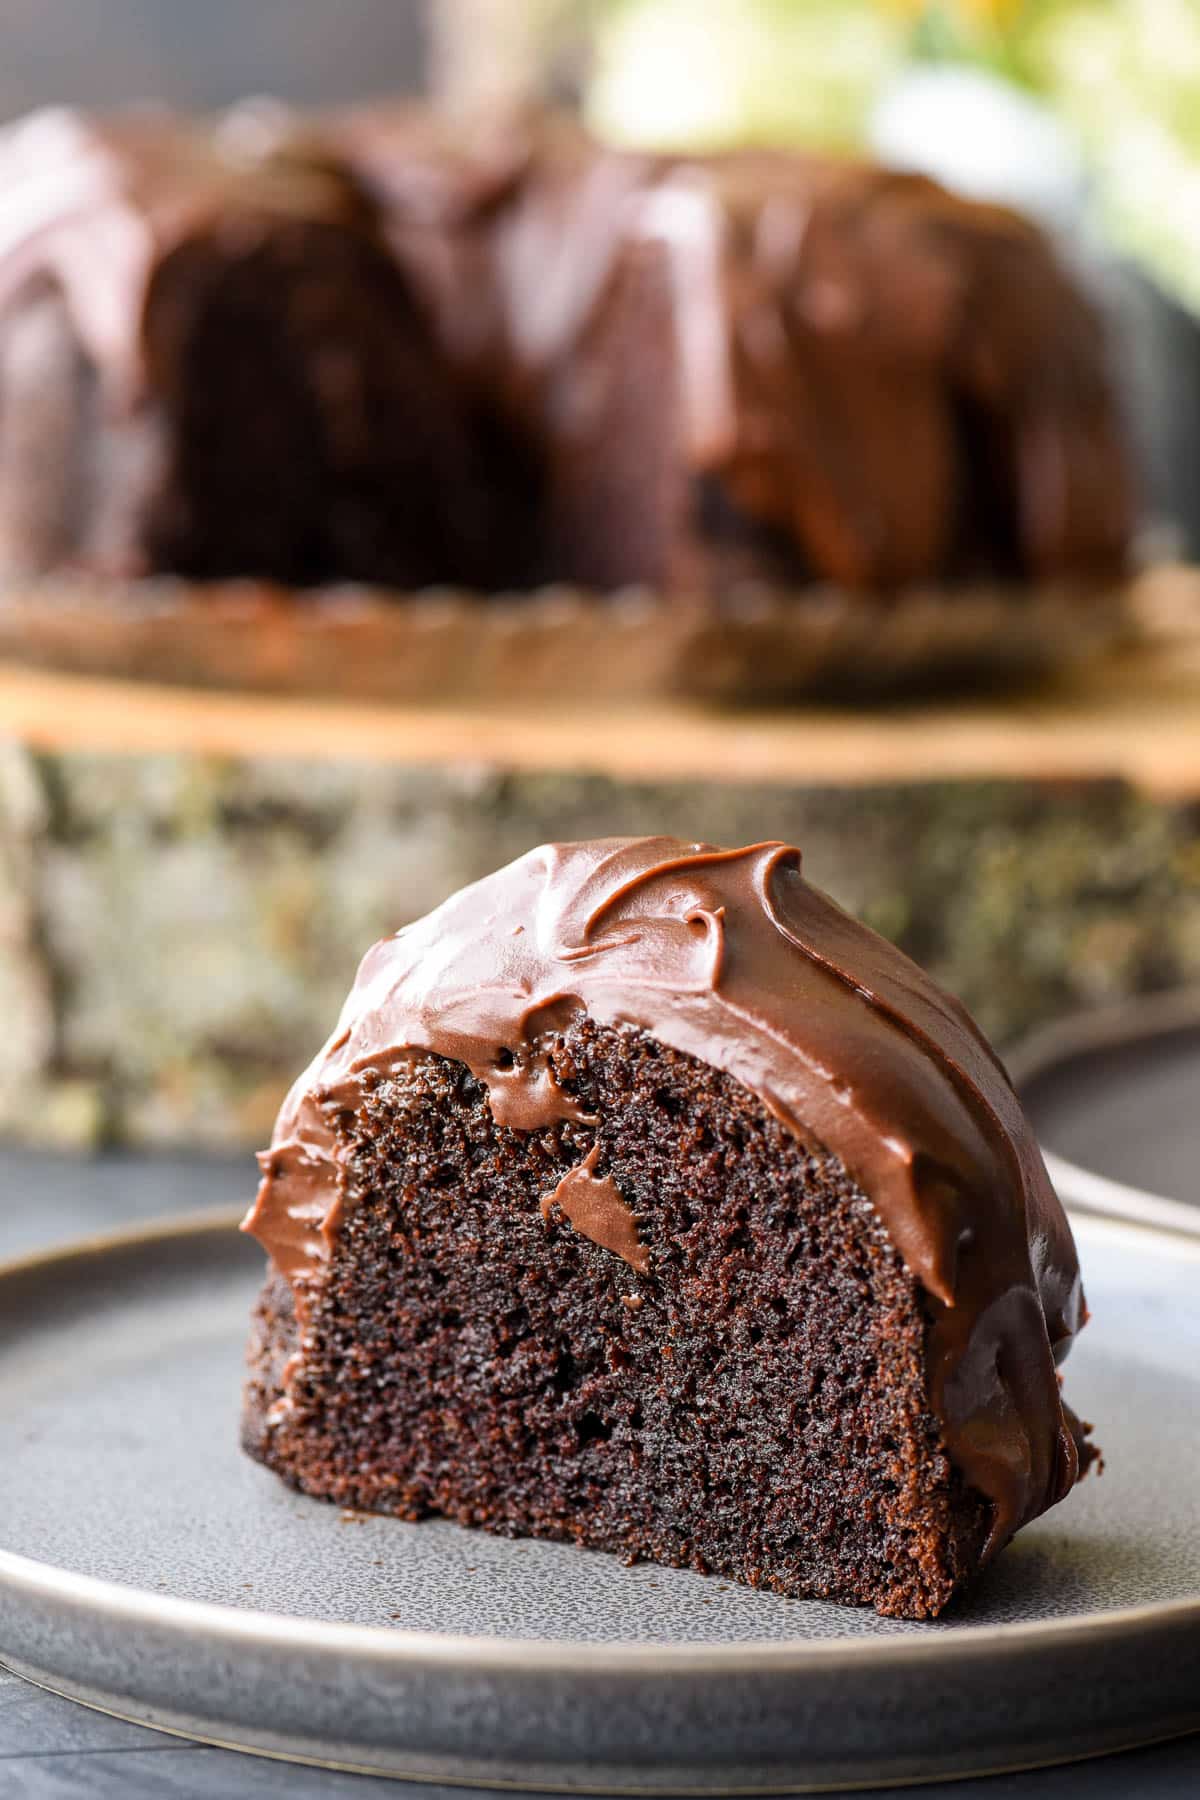 https://neighborfoodblog.com/wp-content/uploads/2012/02/chocolate-bundt-cake-5.jpg